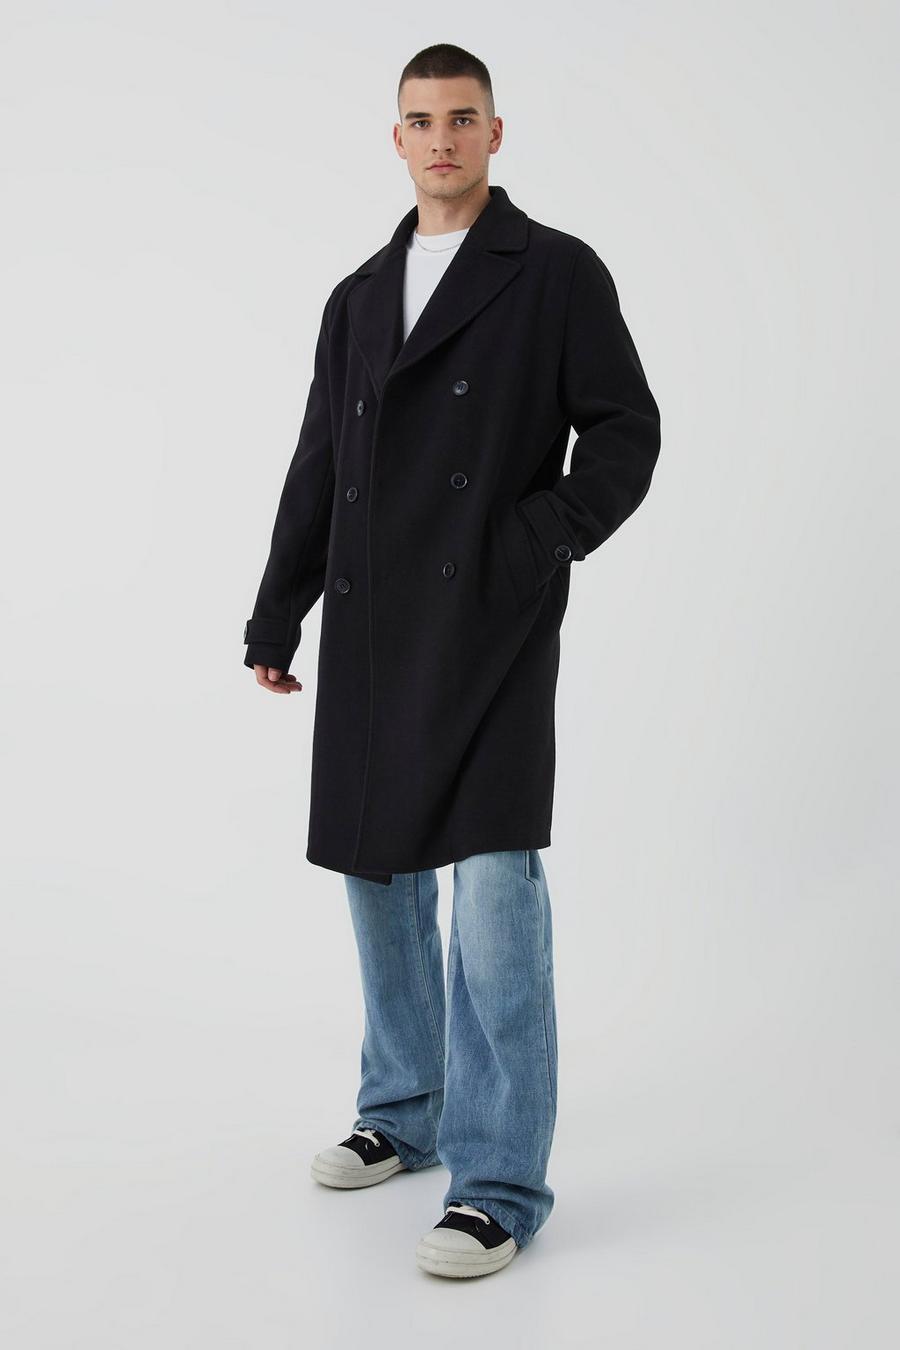 Black noir Tall Double Breasted Wool Look Overcoat